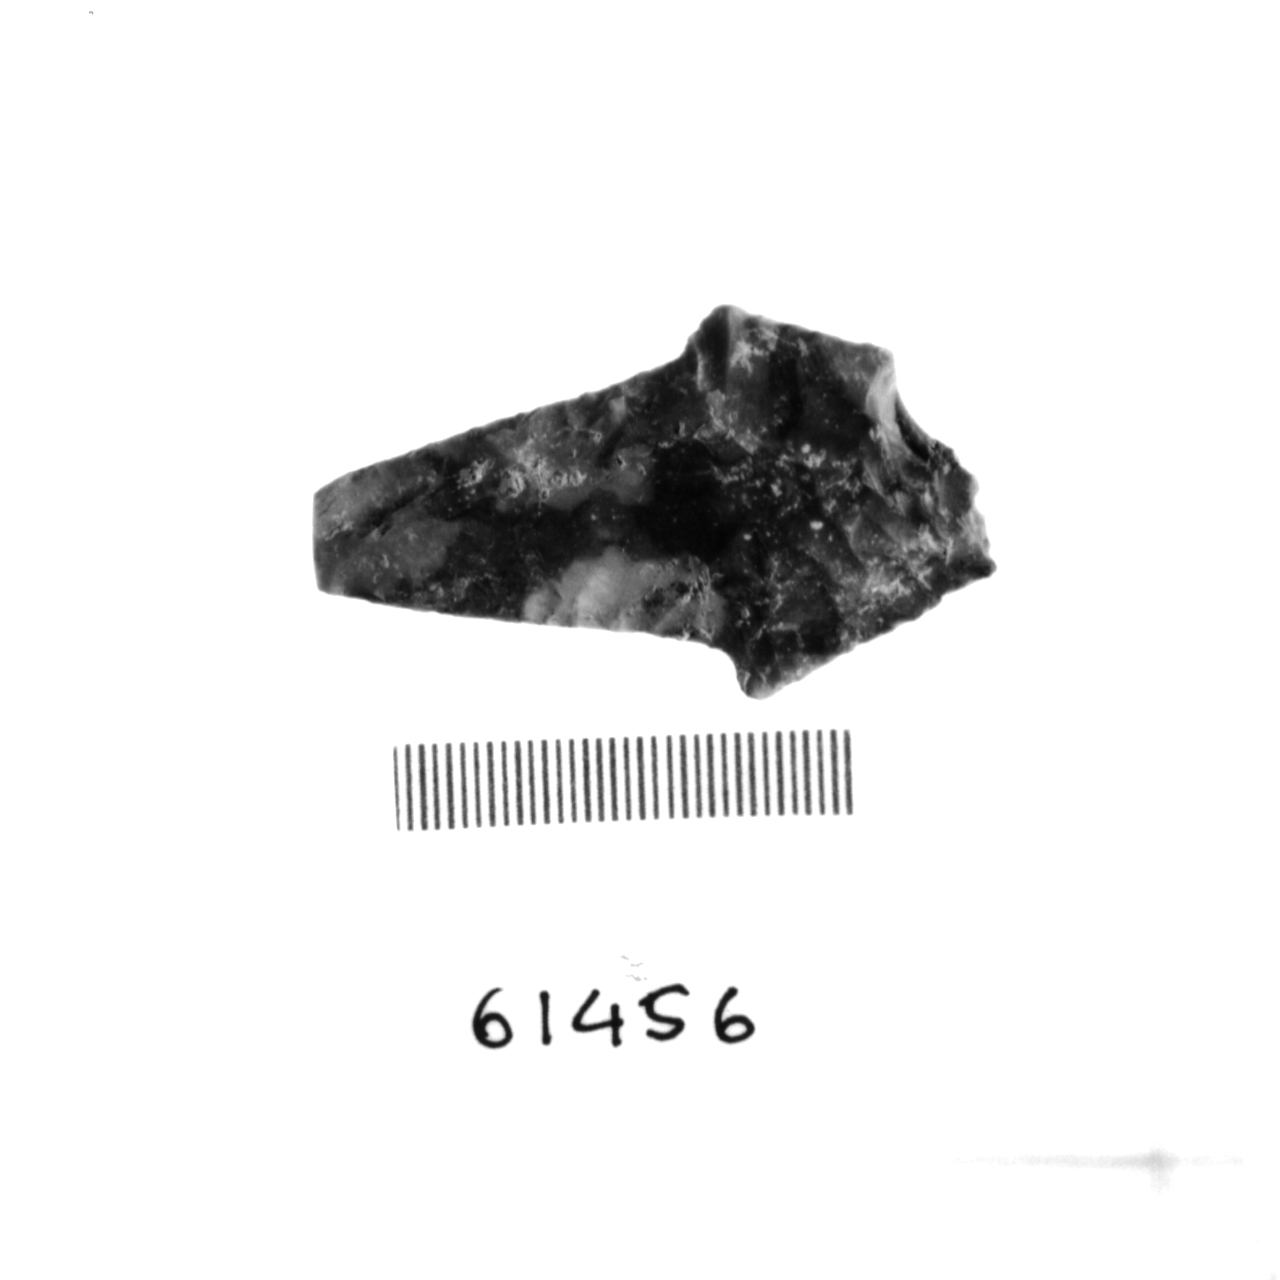 punta foliata peduncolata (Eneolitico)